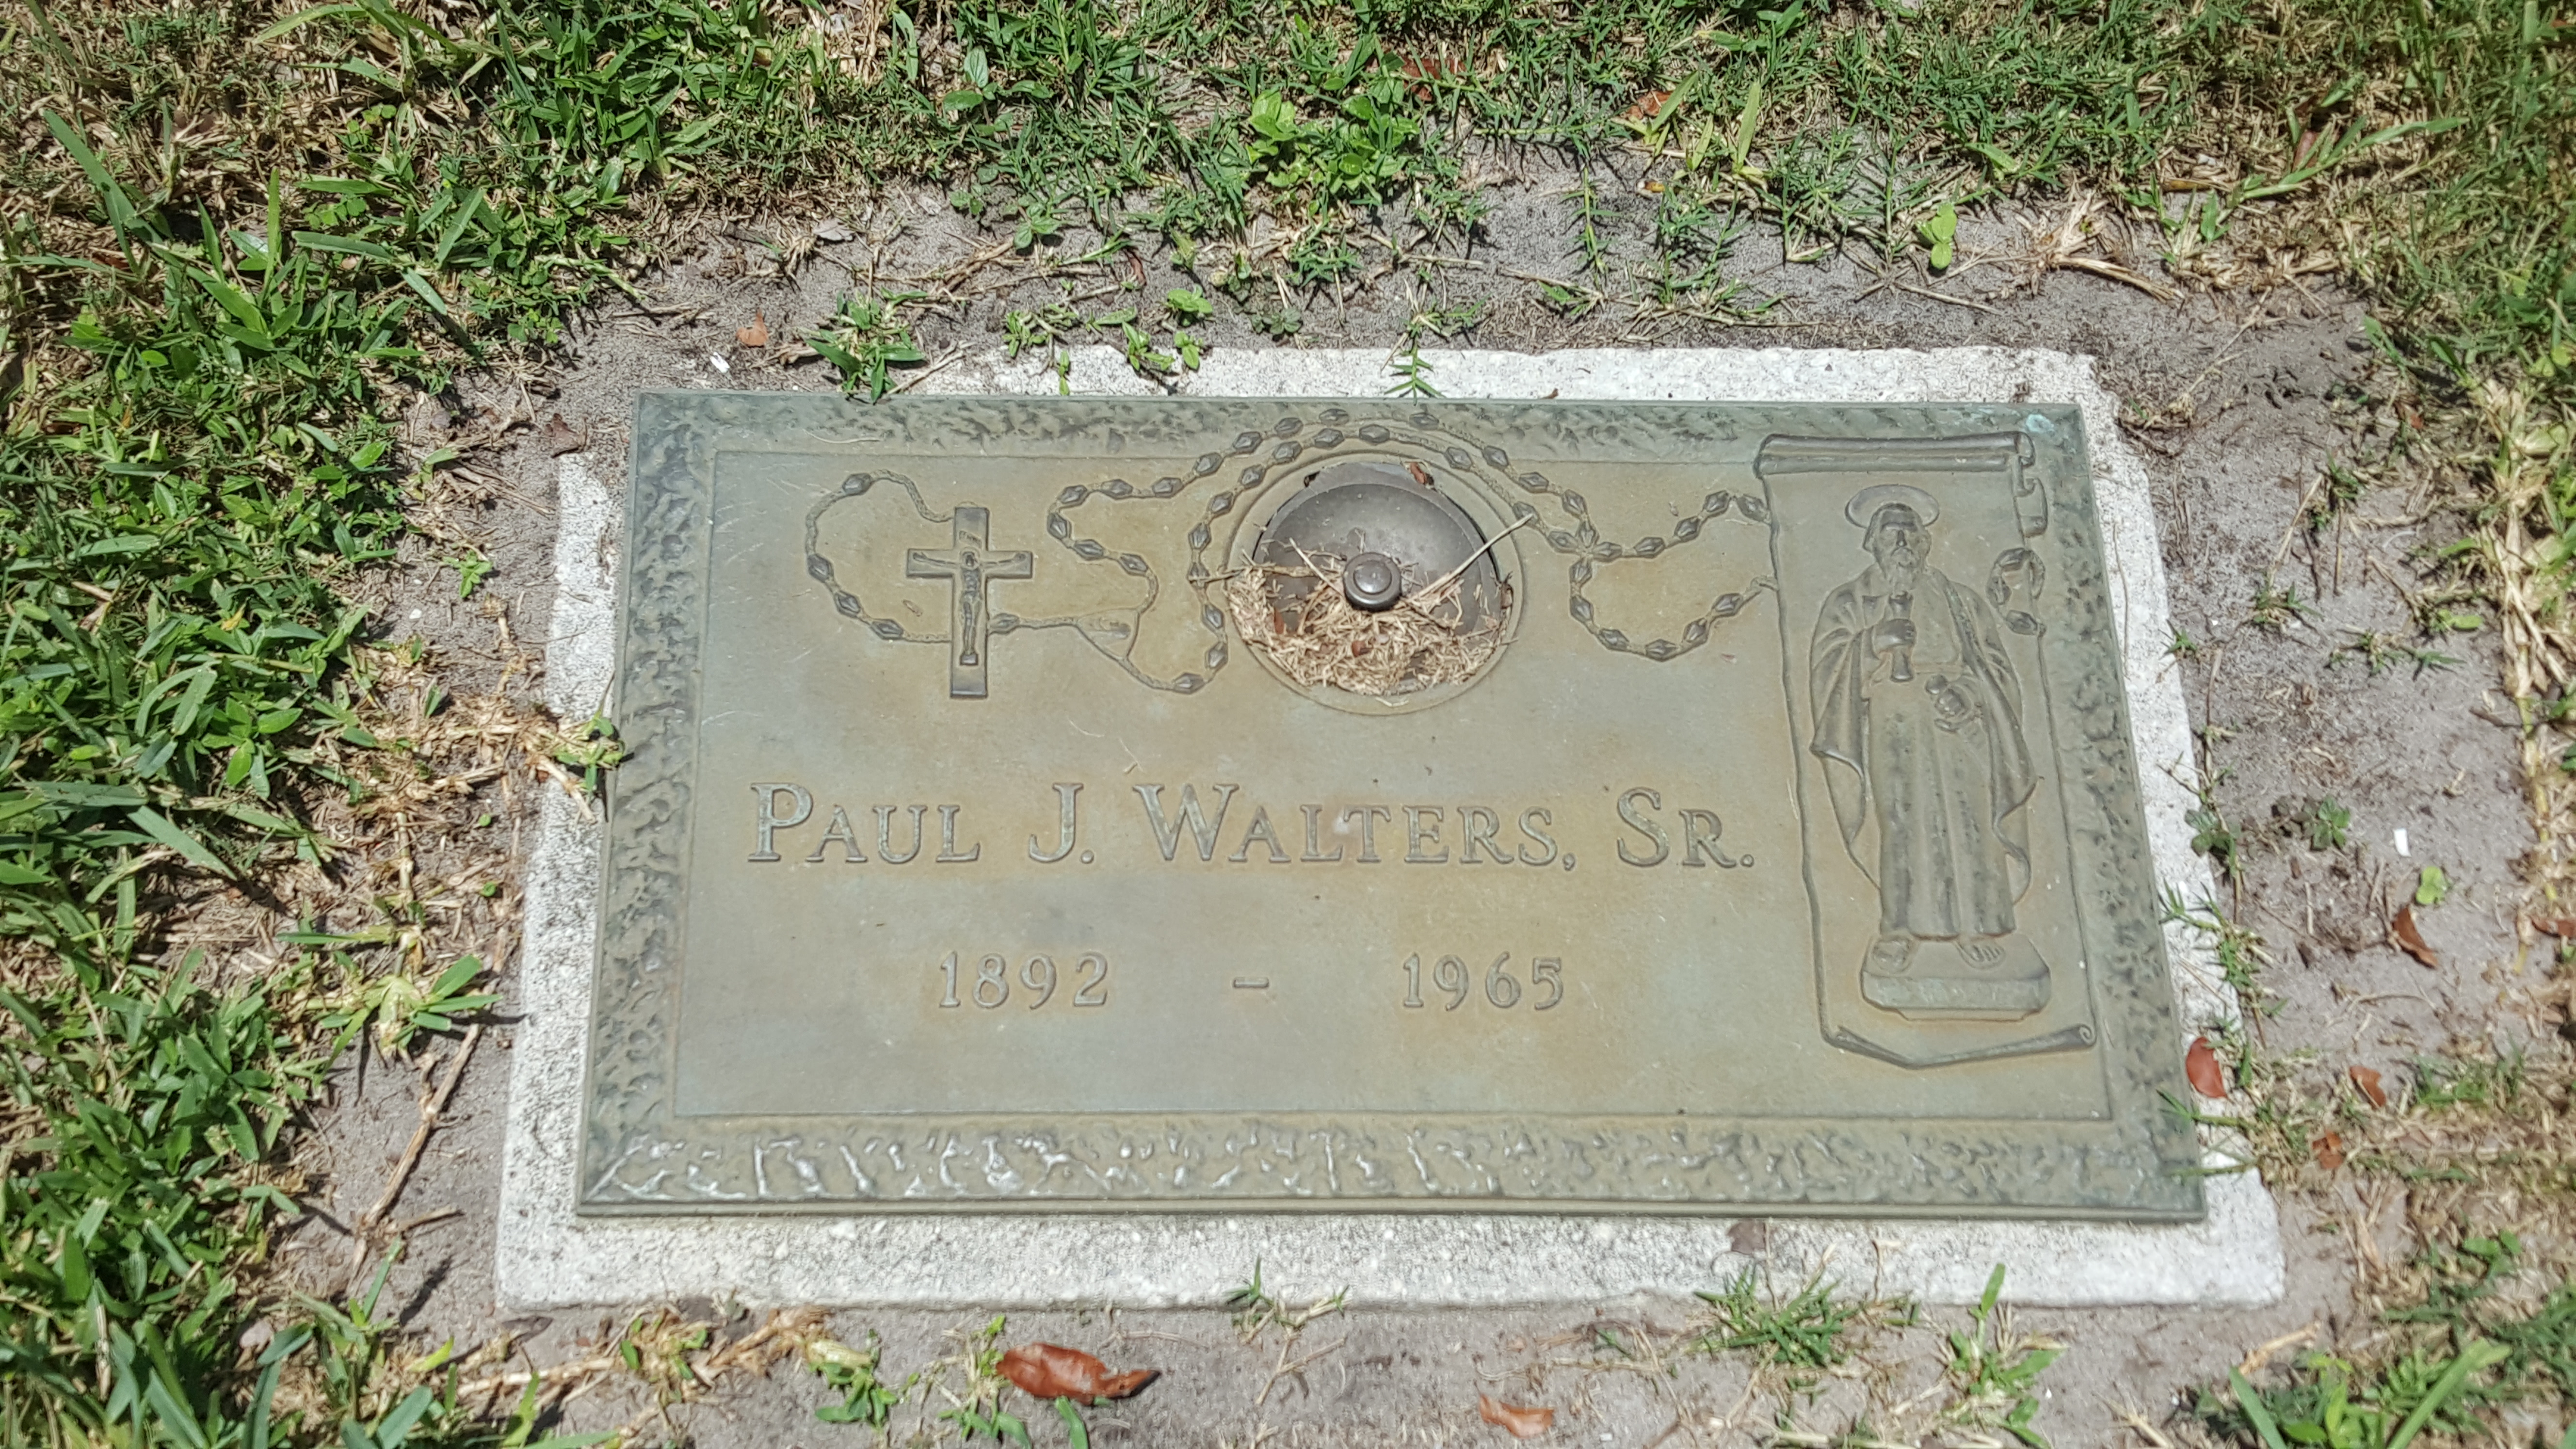 Paul J Walters, Sr